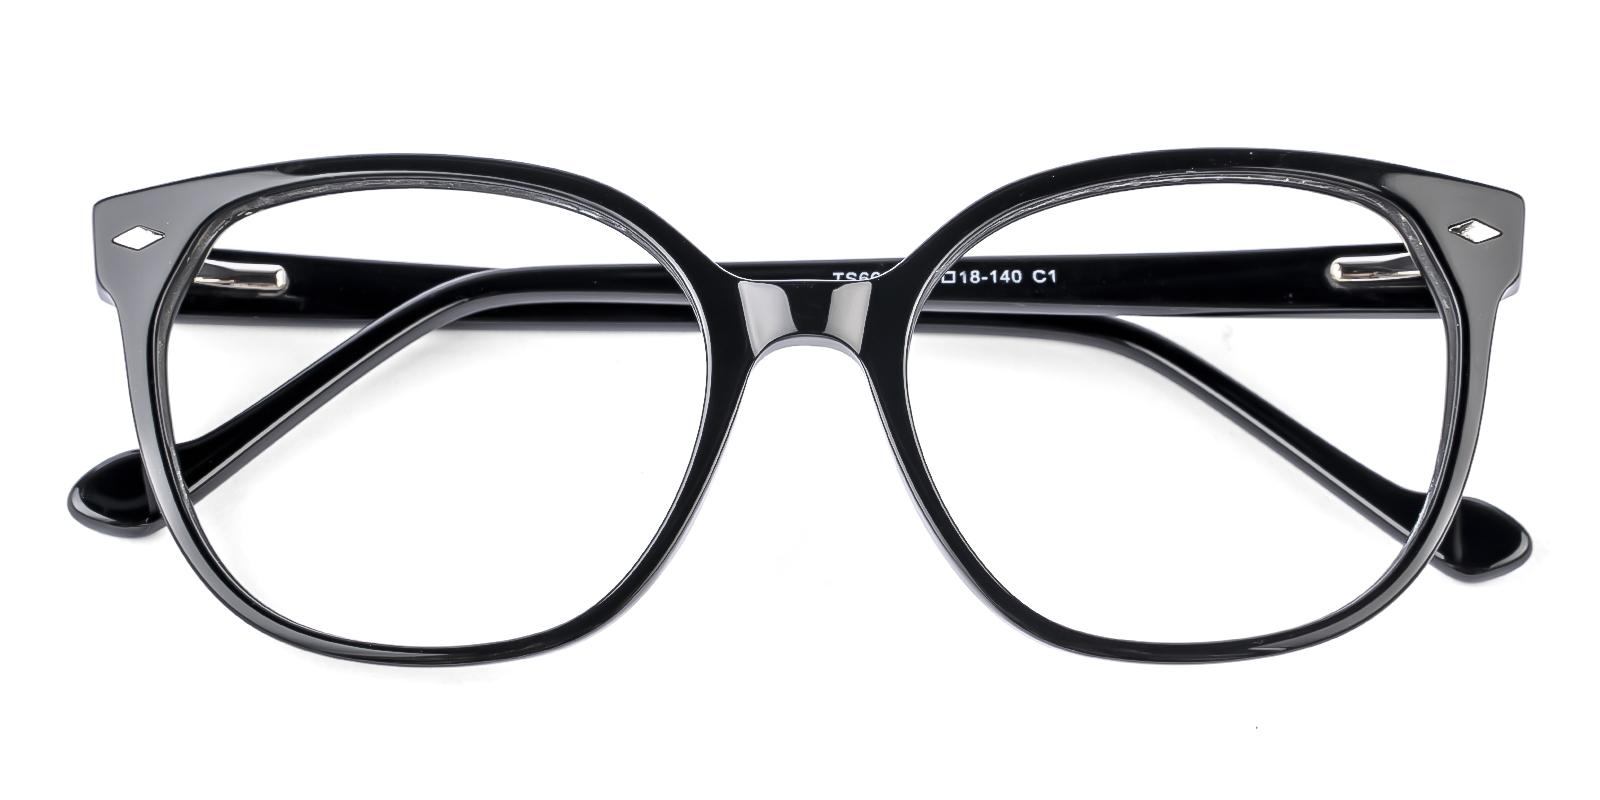 Landel Black Acetate Eyeglasses , SpringHinges , UniversalBridgeFit Frames from ABBE Glasses